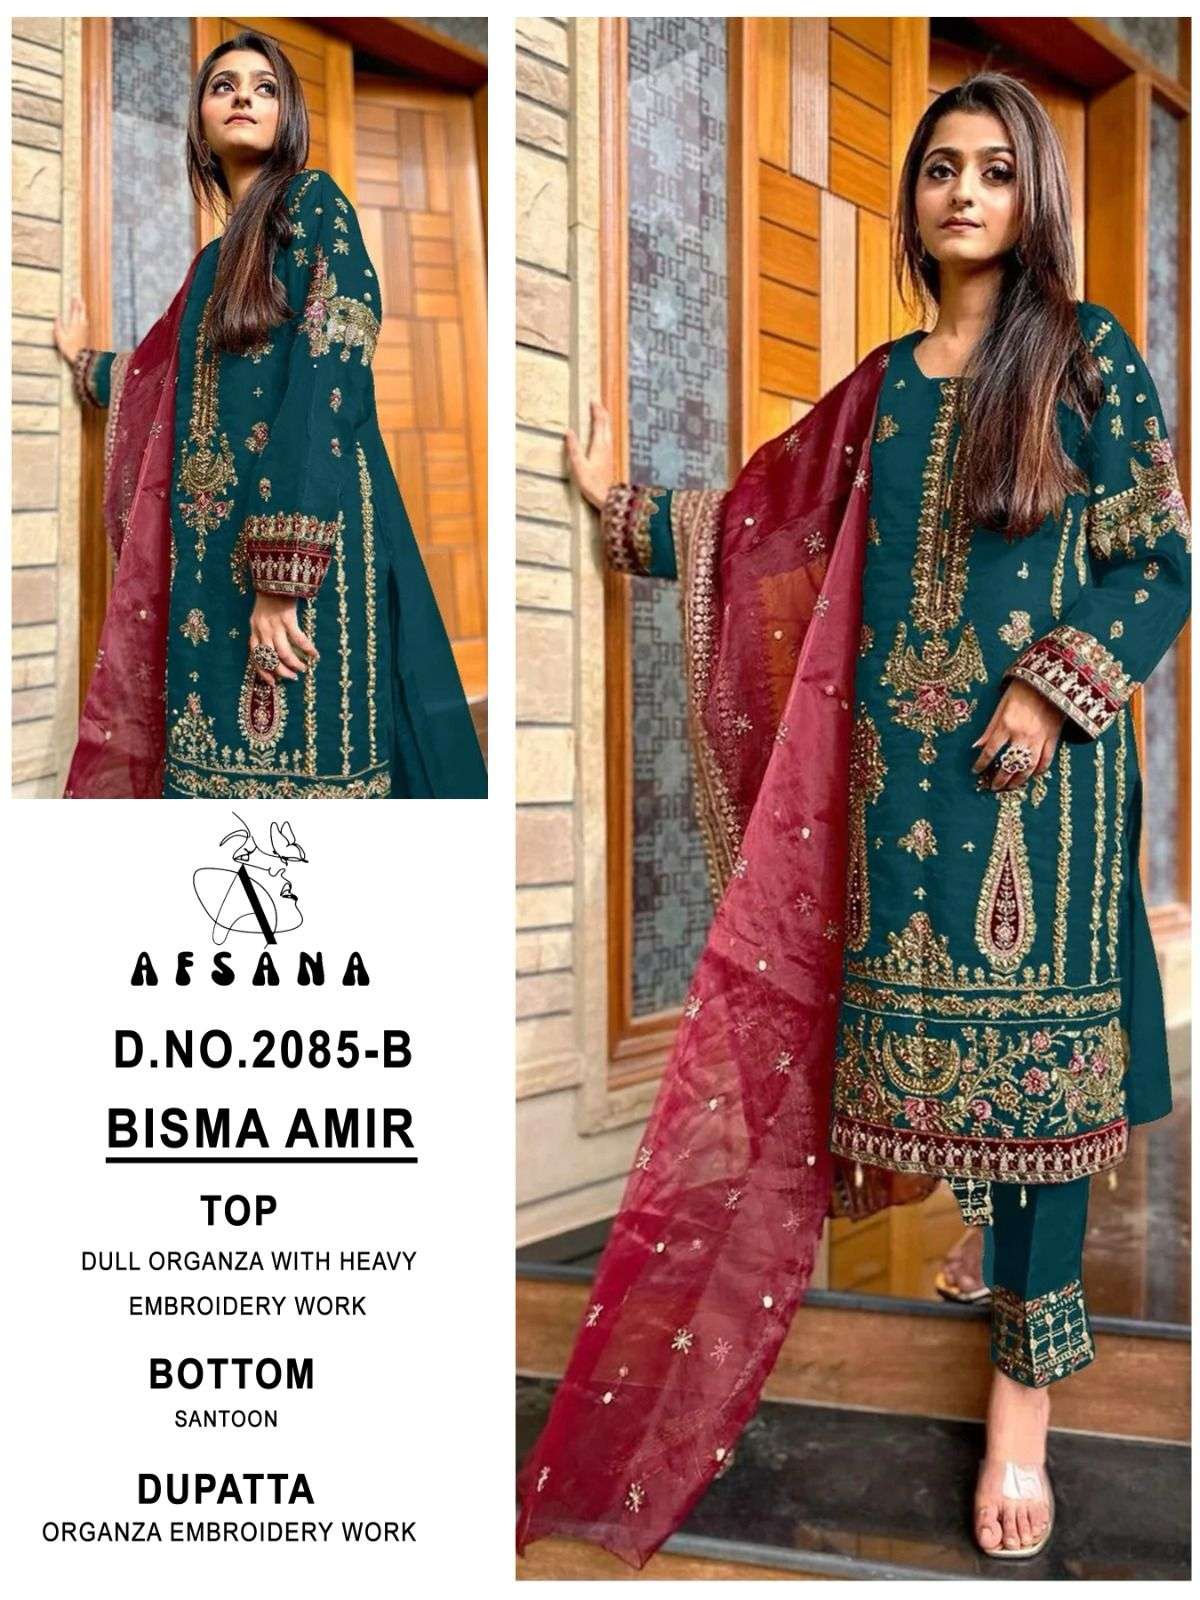 afsana bisma amir d no 2085 organja decent embroidery look top bottom with dupatta size set